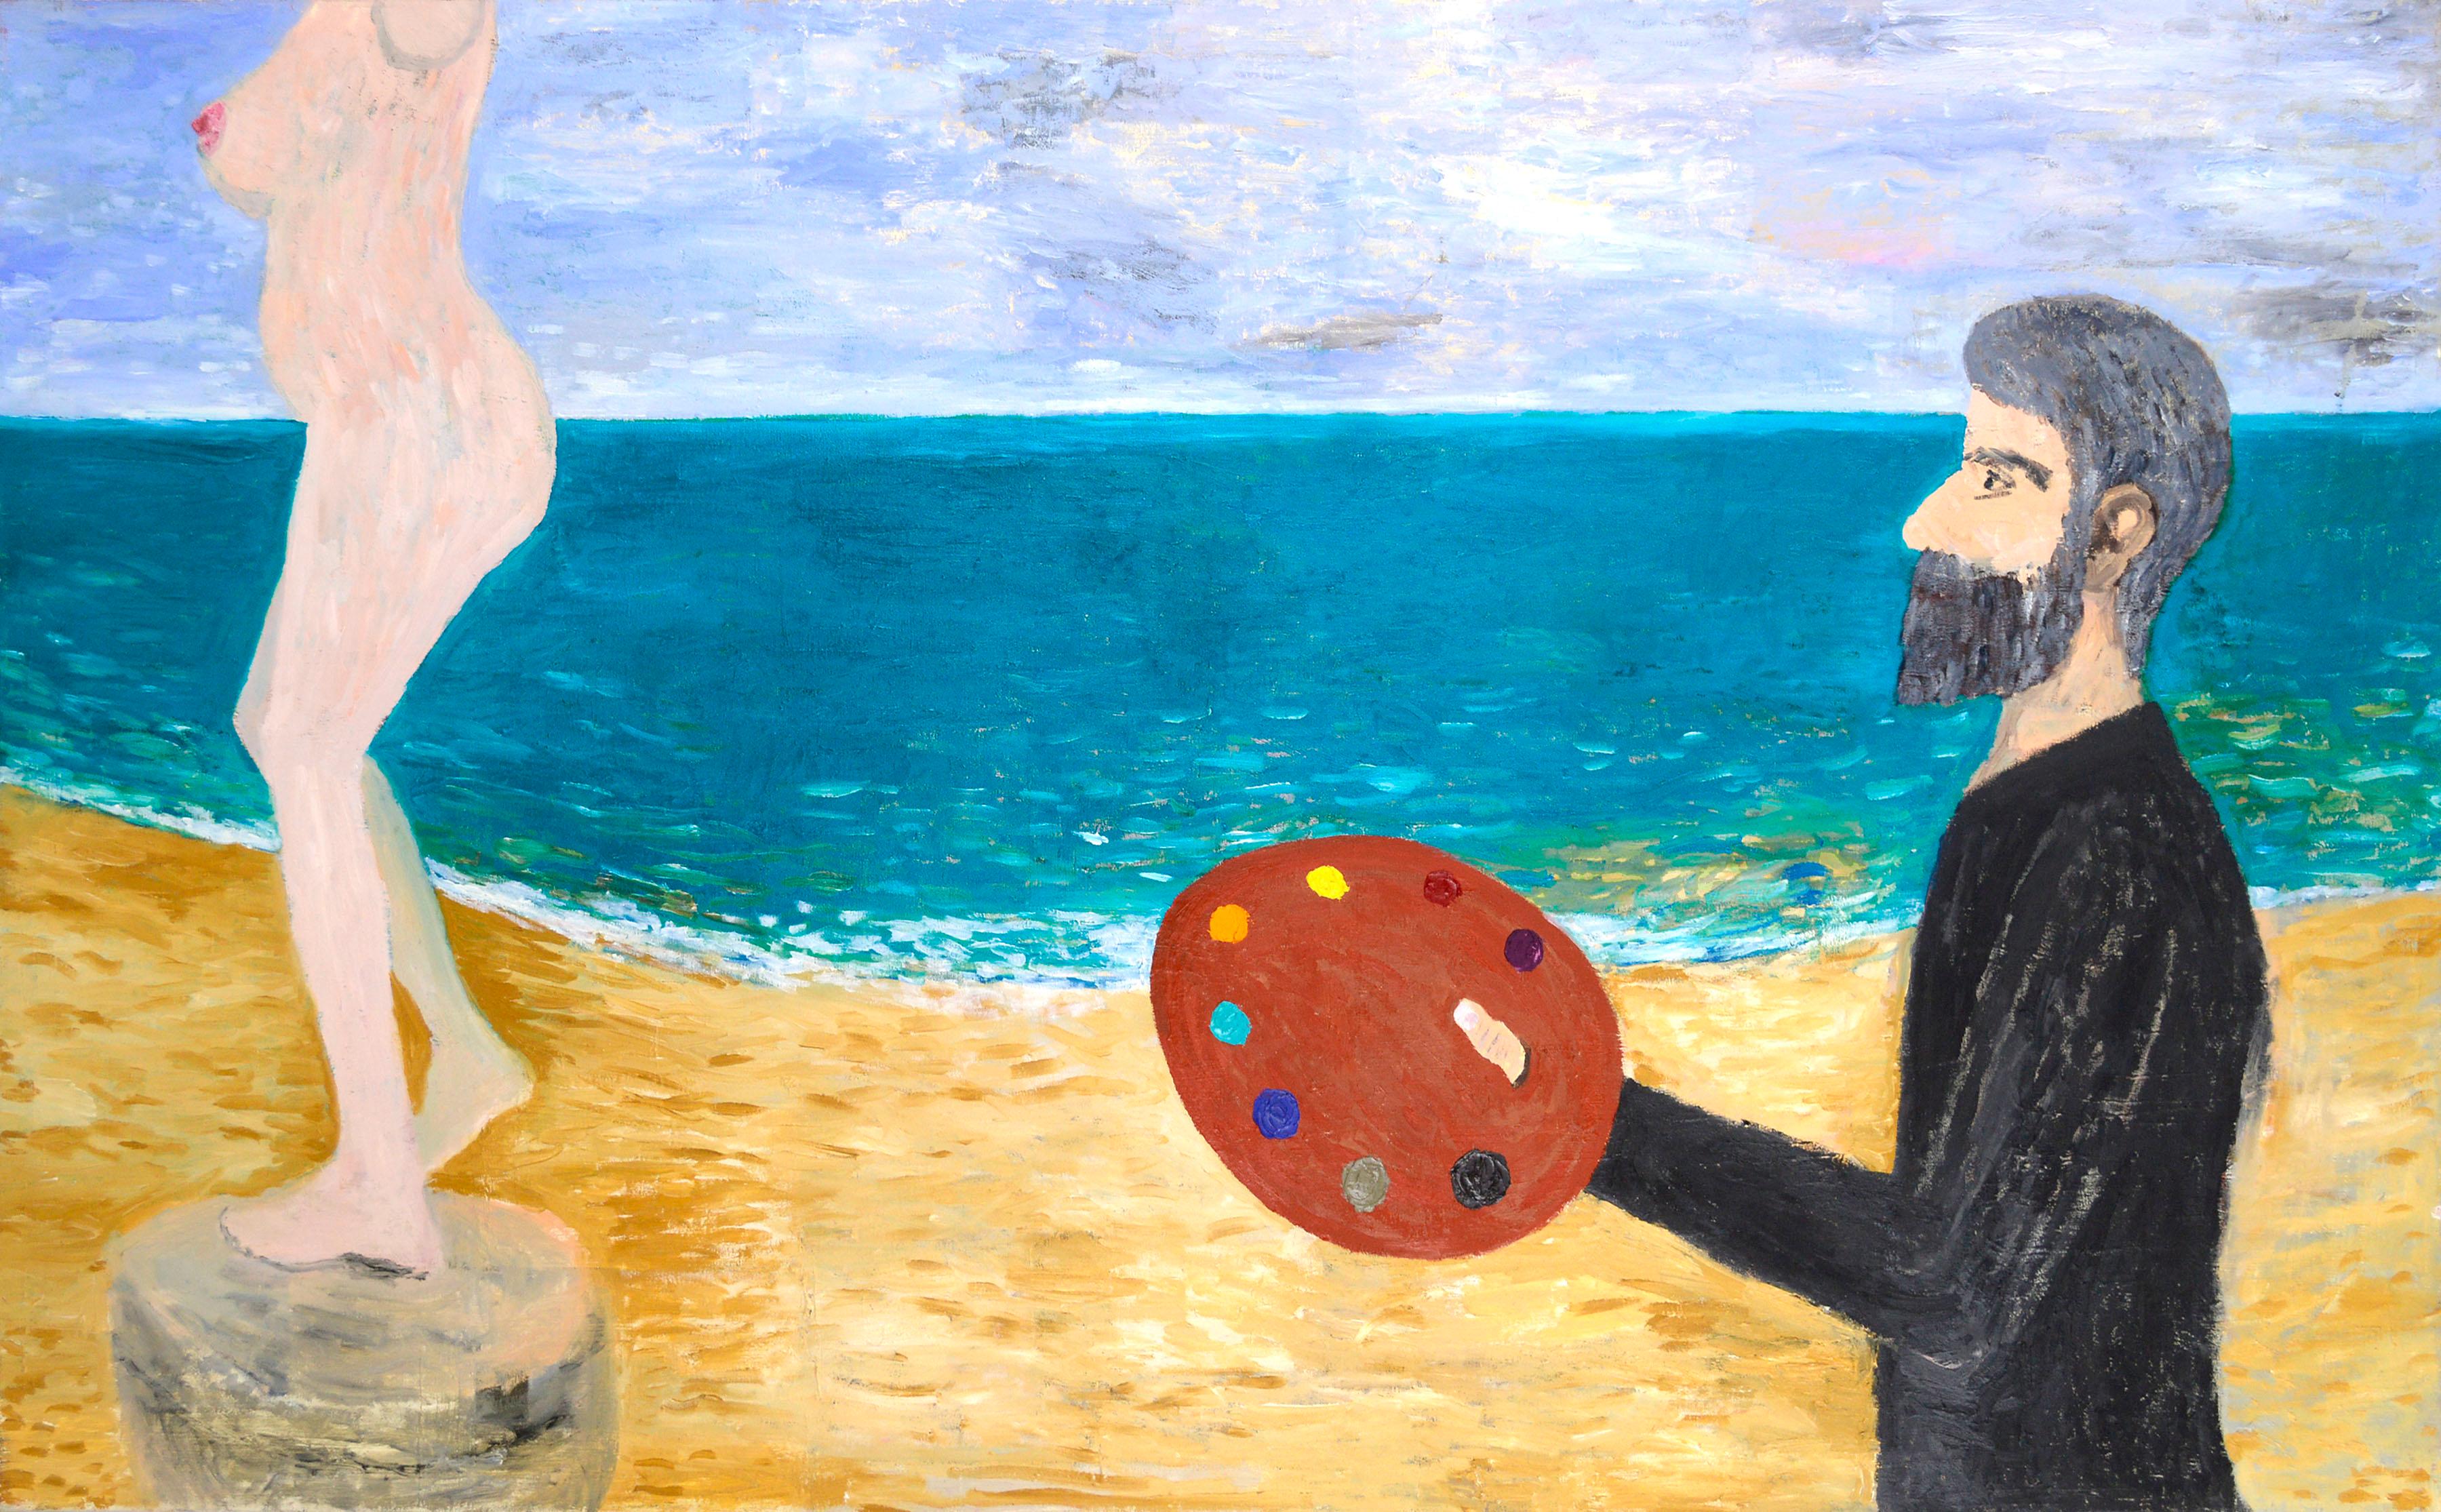 Michael Pauker  Figurative Painting - Artist's Dream II - Figure Painting on Beach, Surreal Self-Portrait